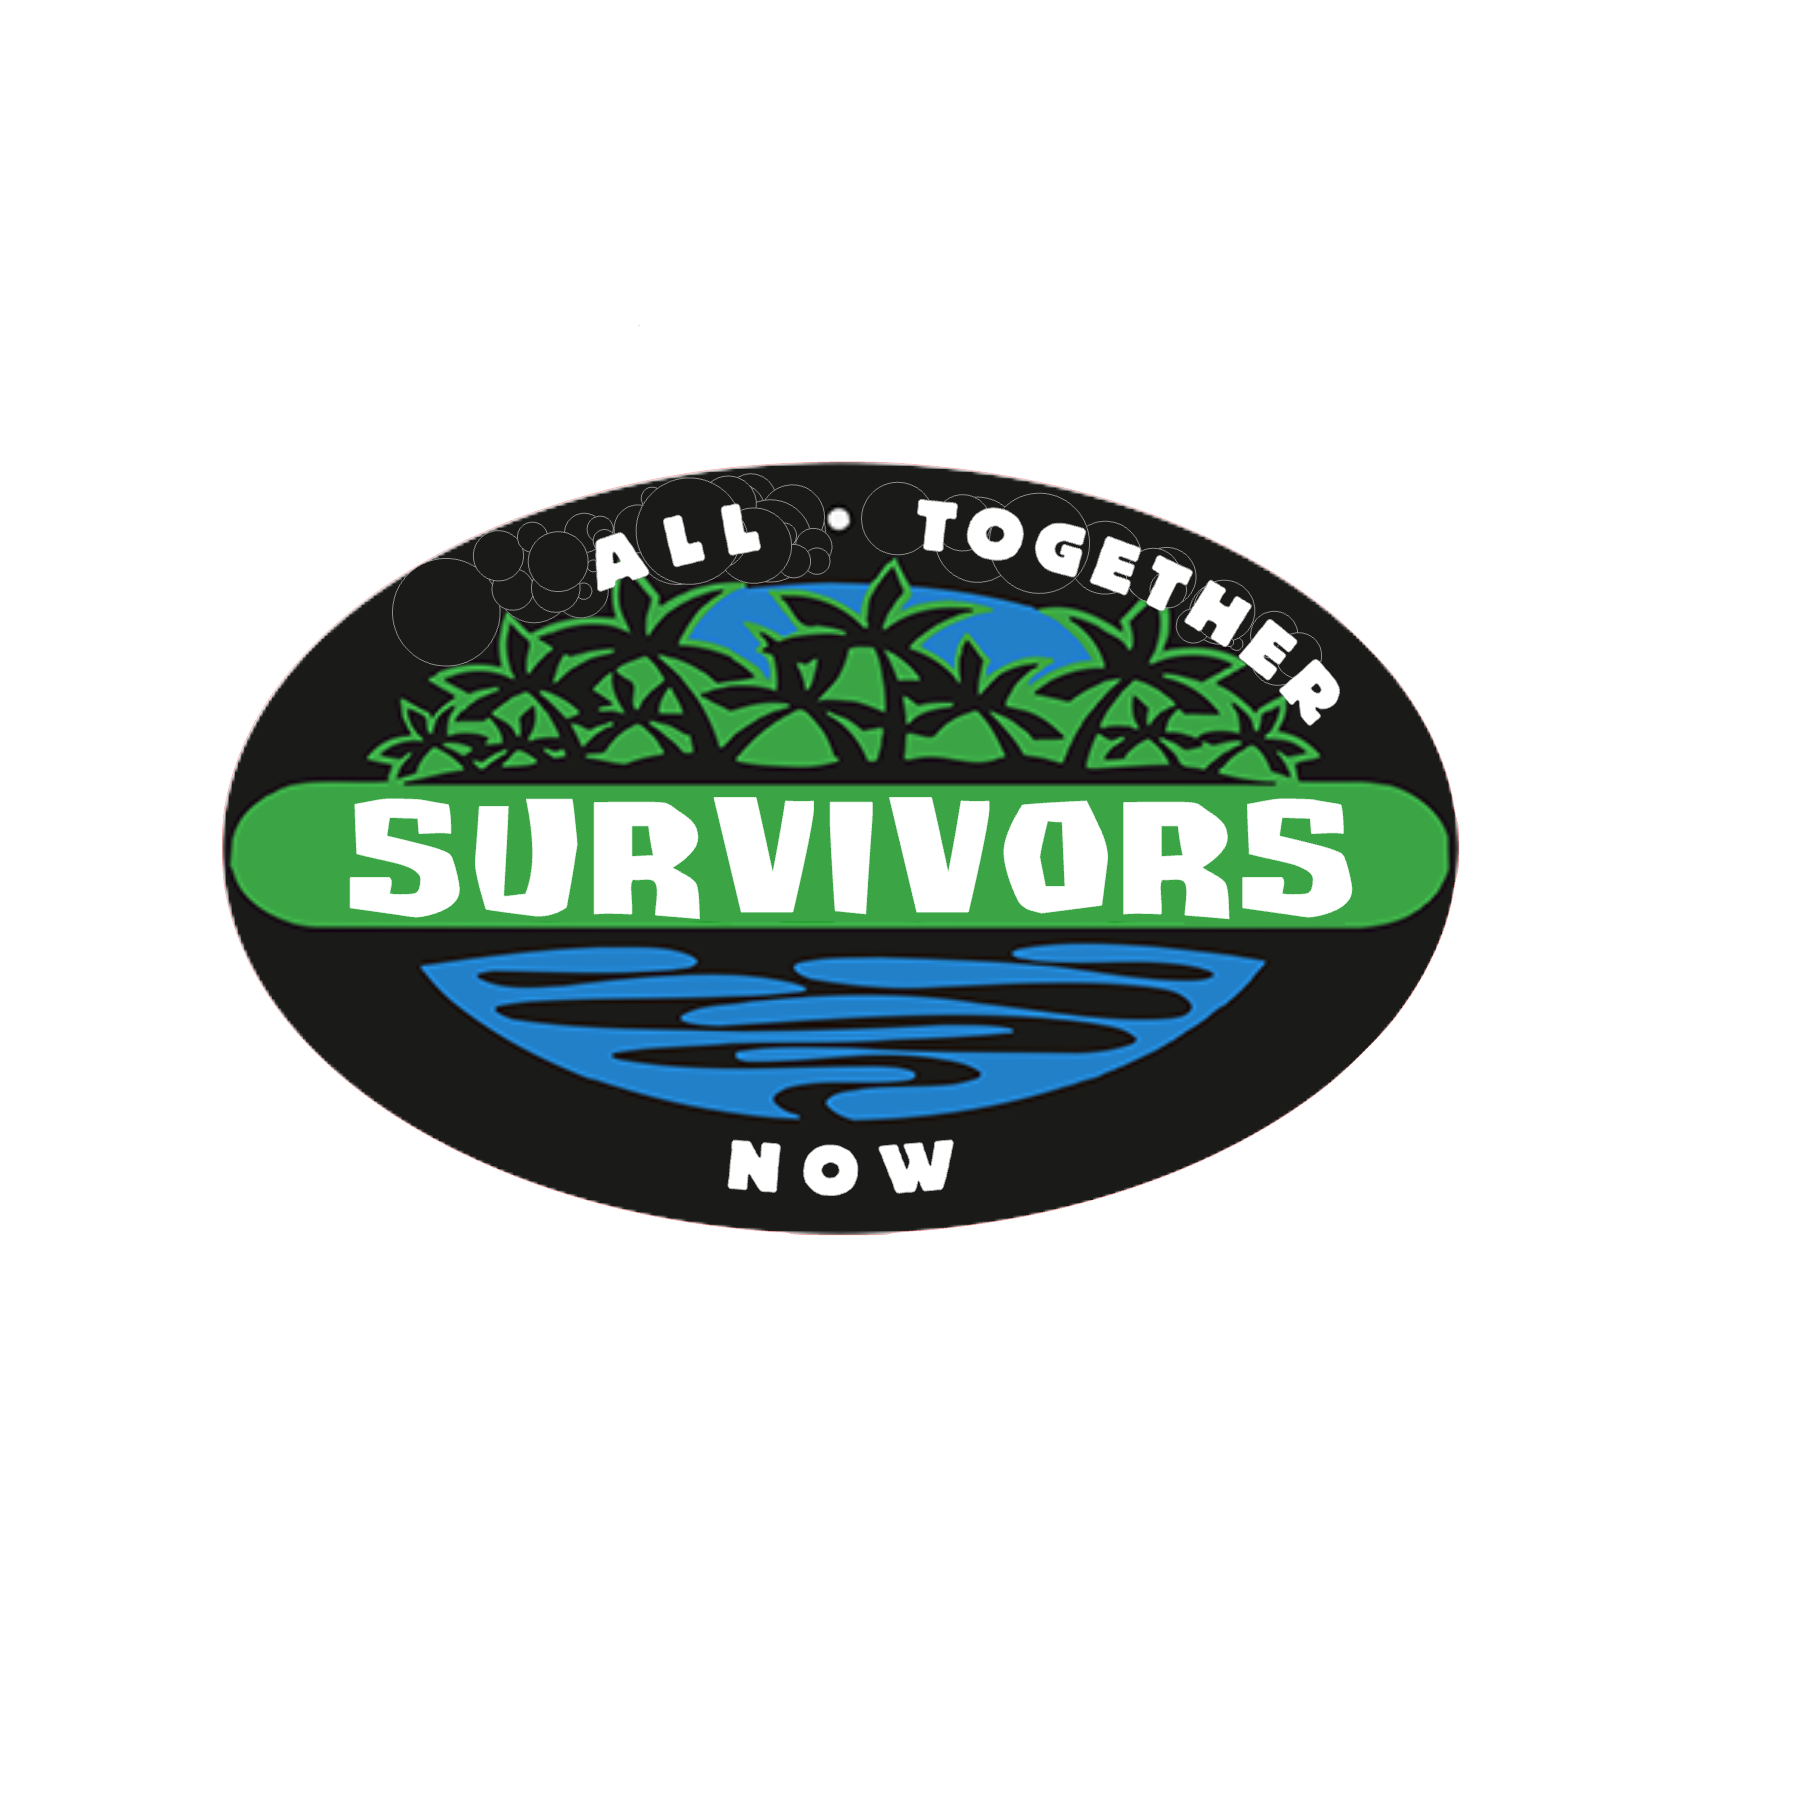 Survivors - All Together Now